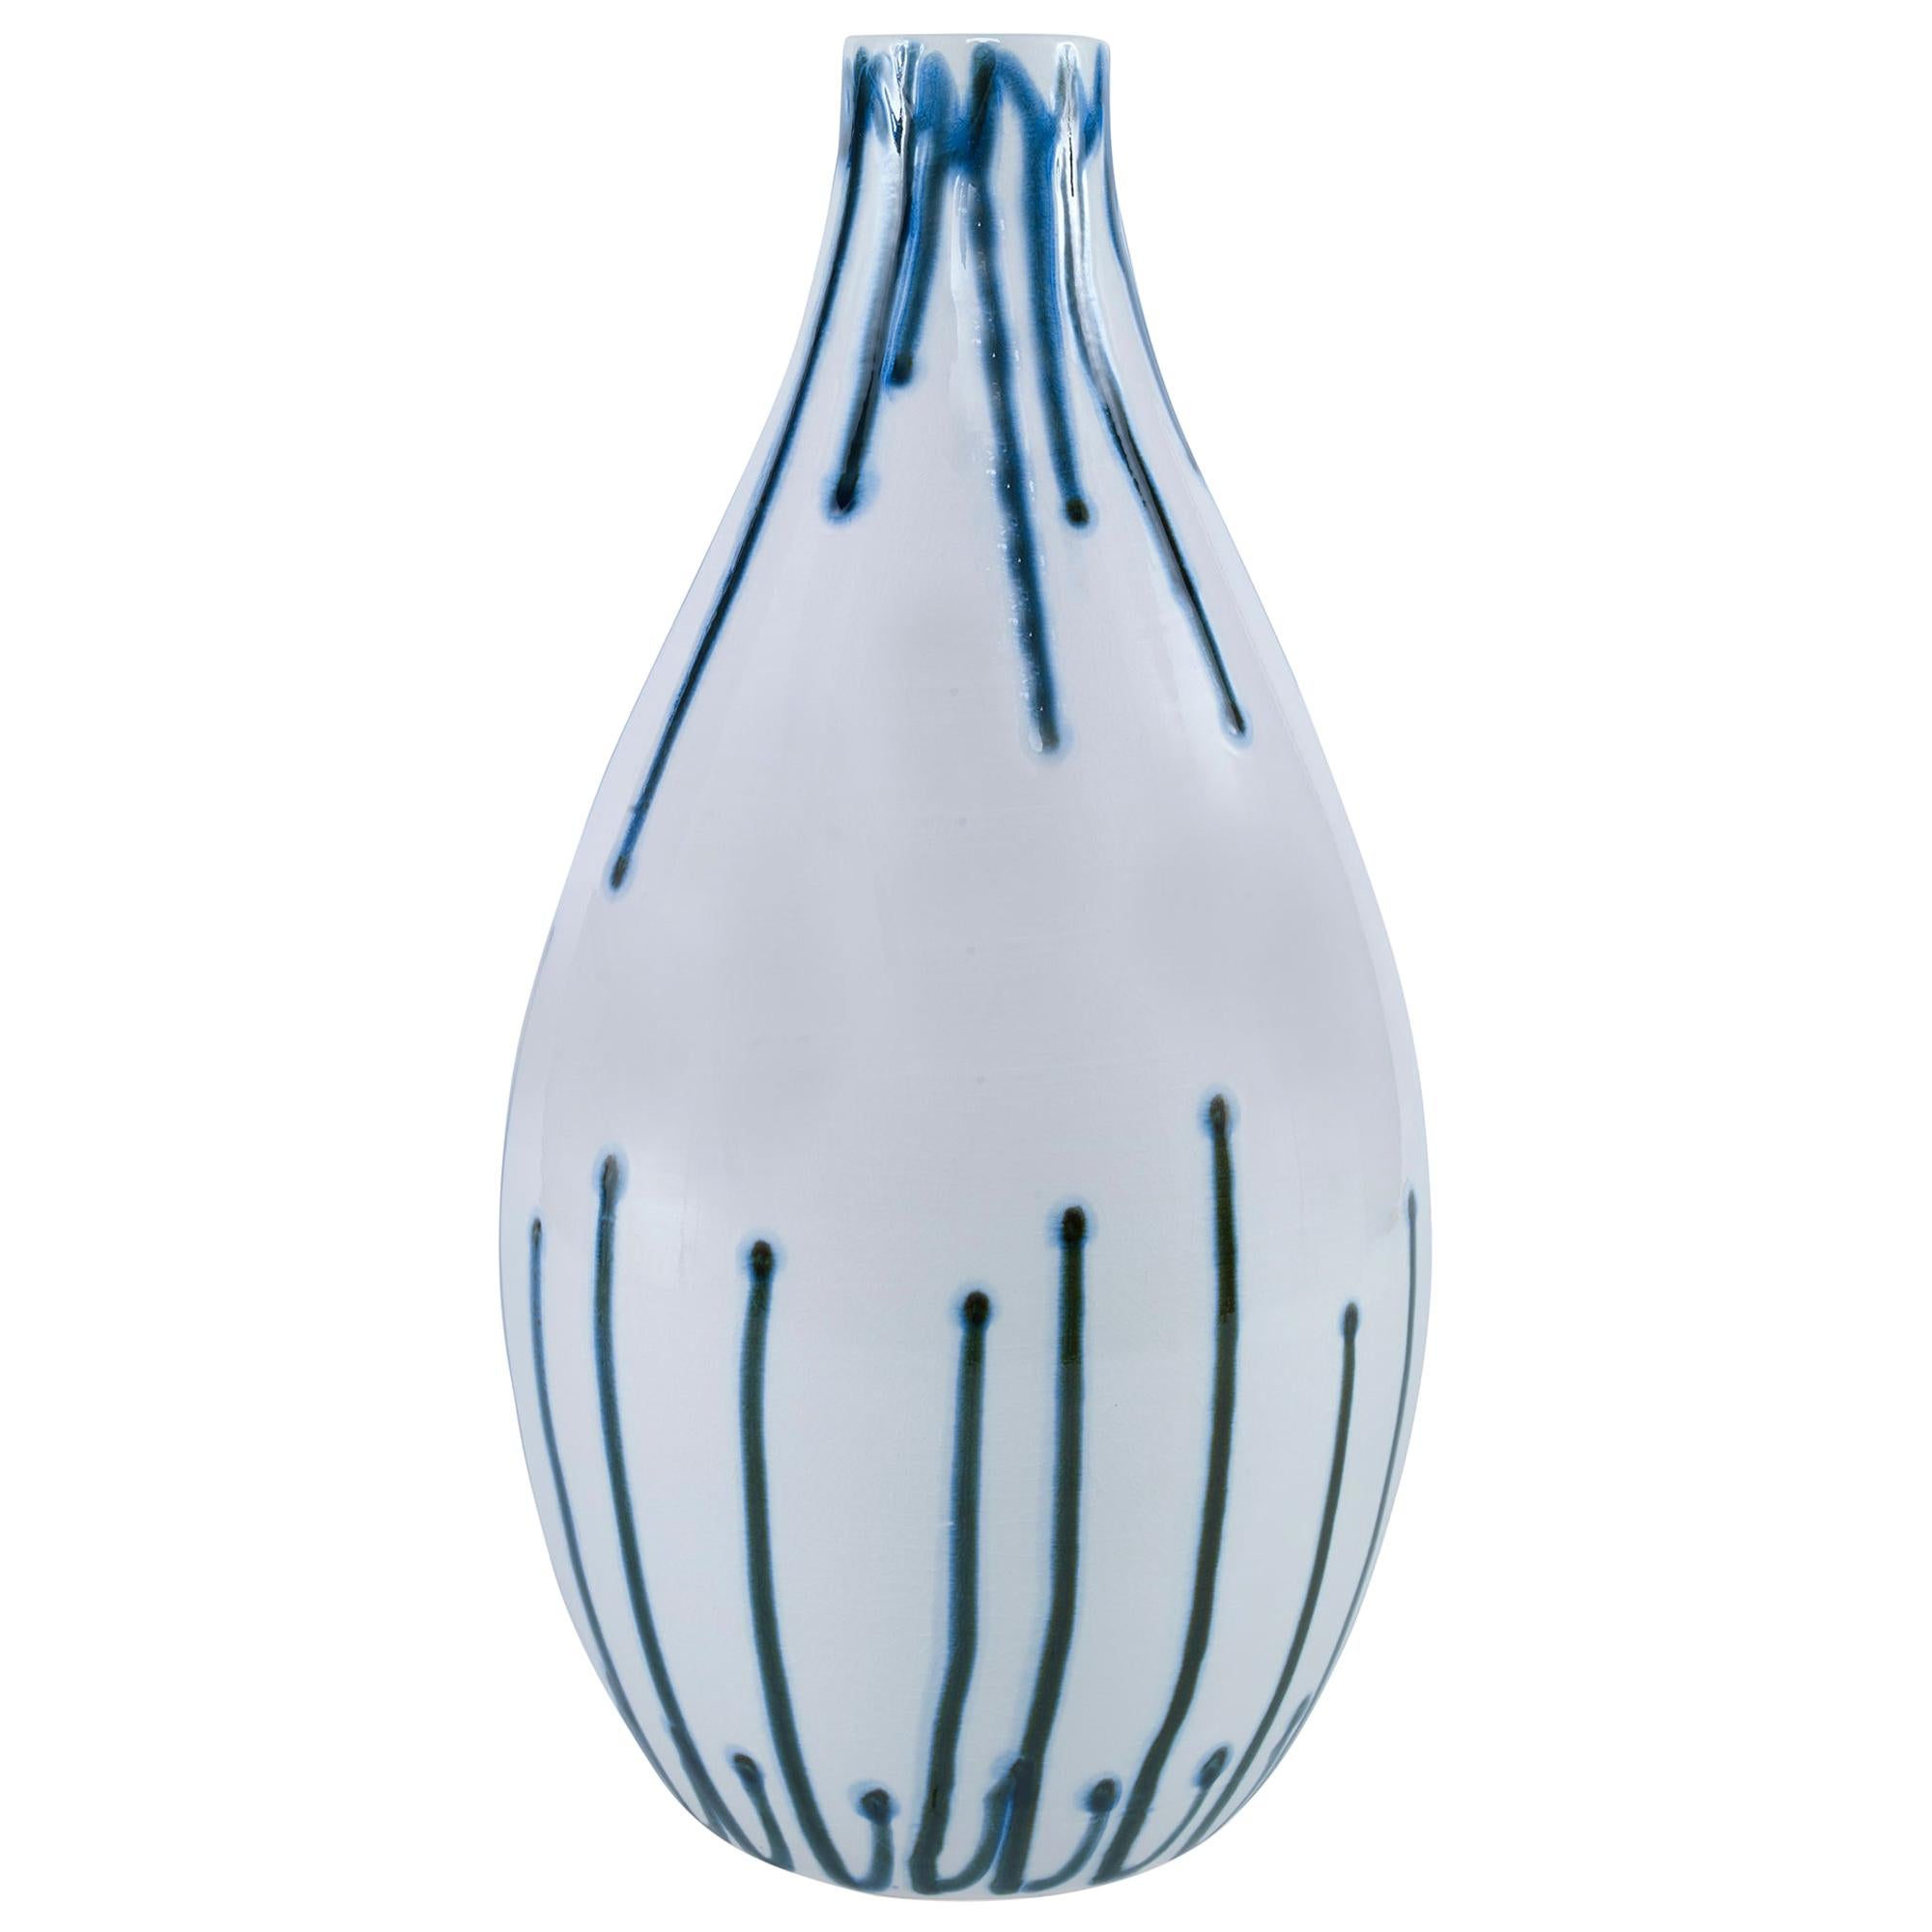 Mira Large Vase in Blue Ceramic by CuratedKravet